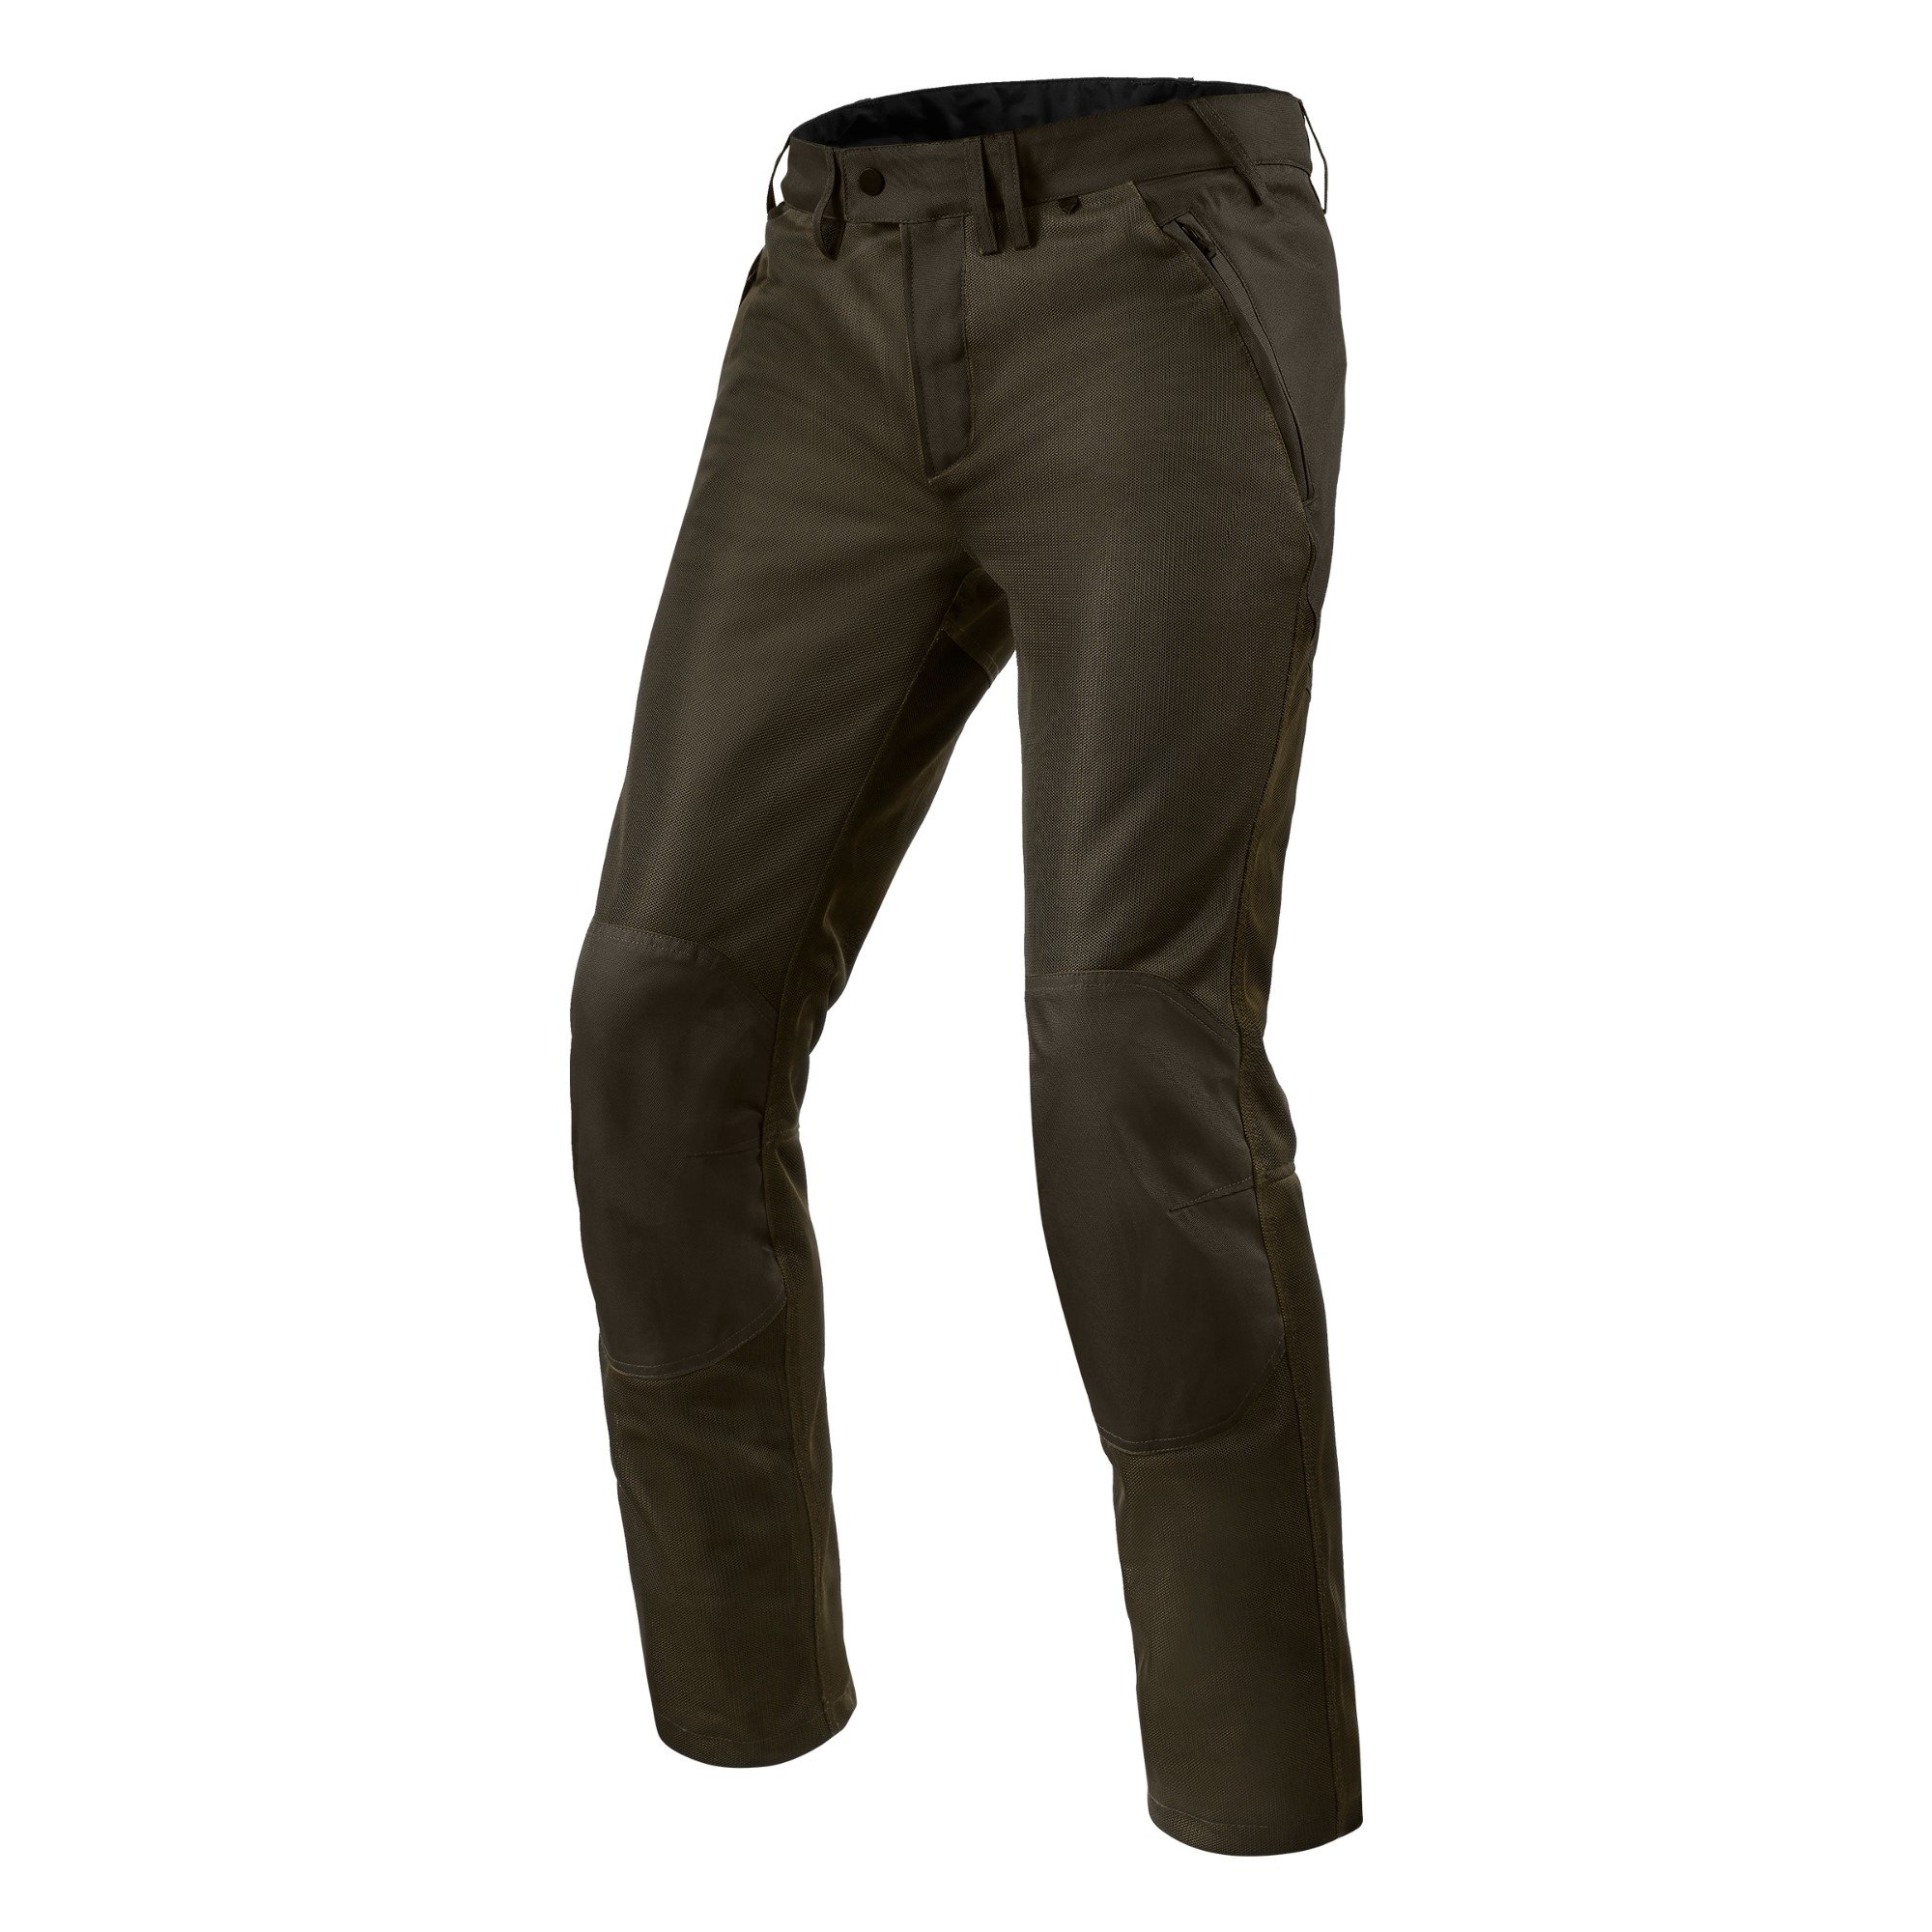 Image of REV'IT! Pants Eclipse 2 Black Olive Short Motorcycle Pants Size 3XL ID 8700001368834